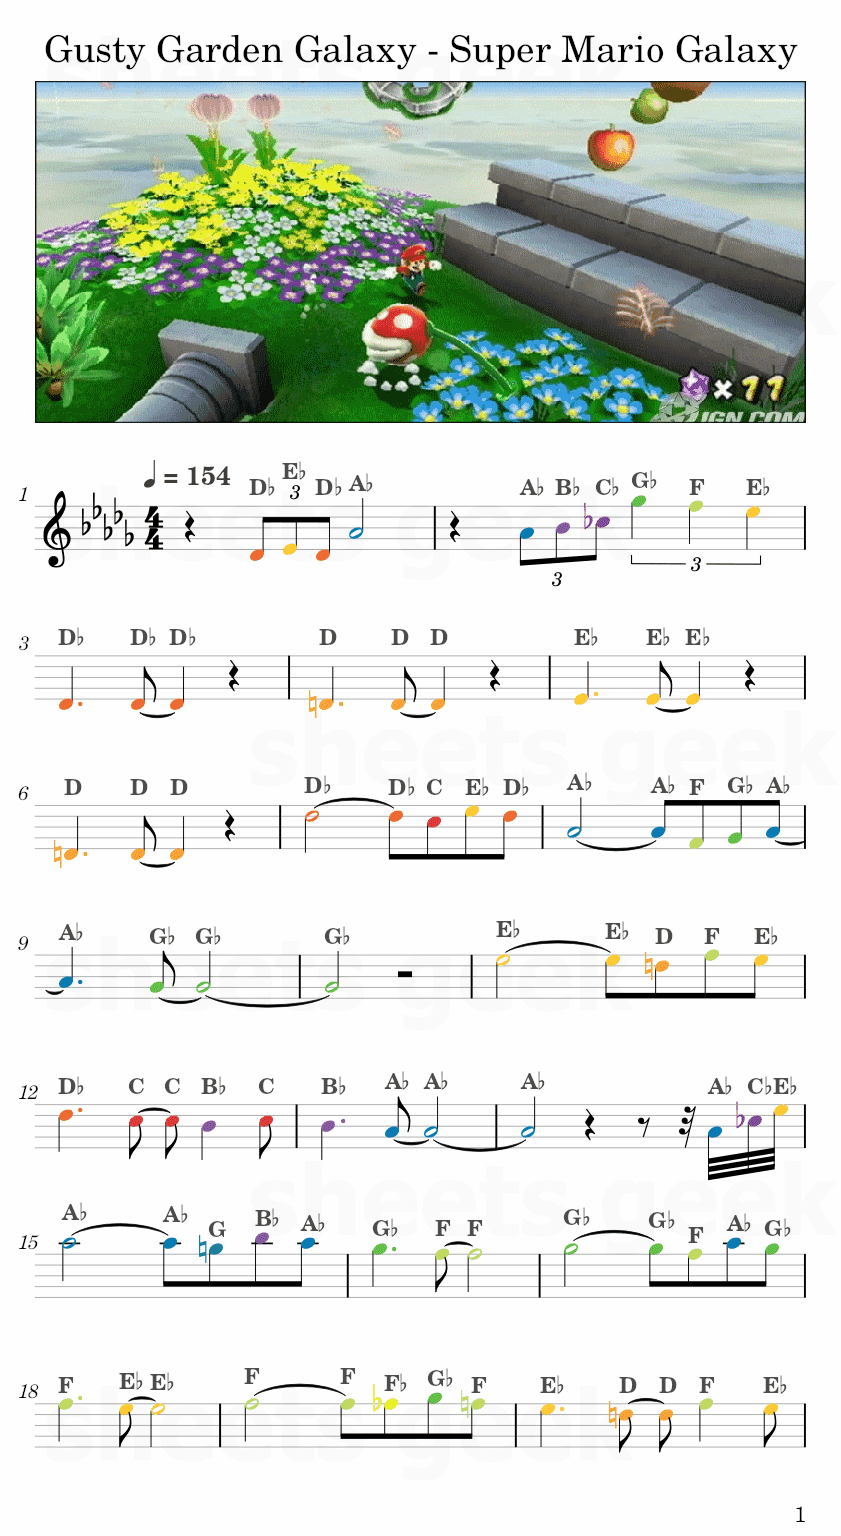 Gusty Garden Galaxy - Super Mario Galaxy Easy Sheet Music Free for piano, keyboard, flute, violin, sax, cello page 1